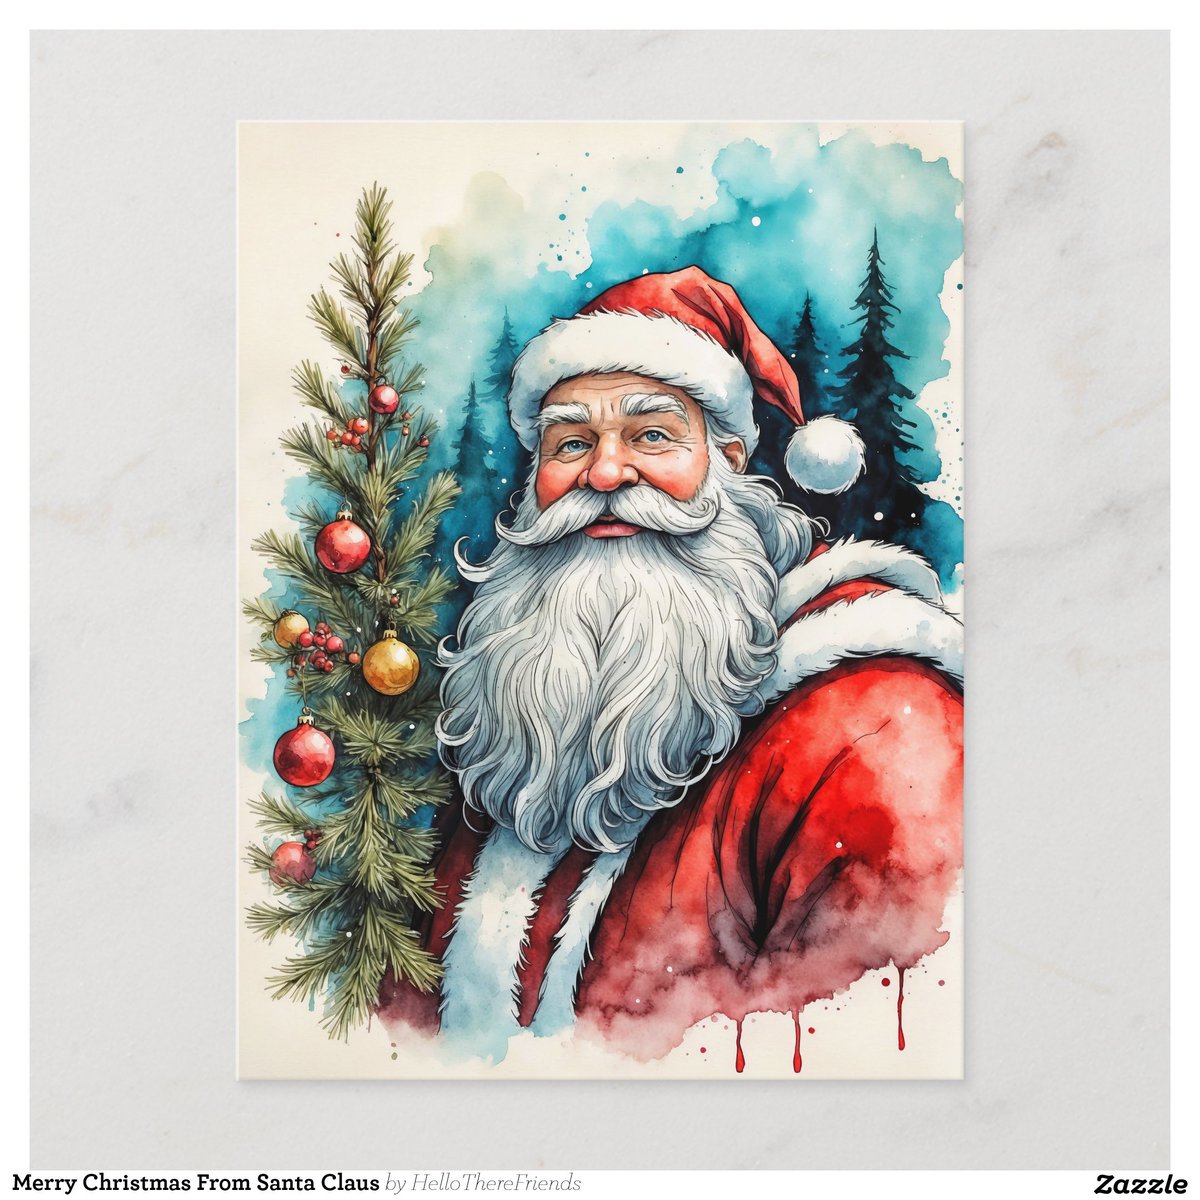 Merry Christmas From Santa Claus Postcard→zazzle.com/z/8ipot4v6?rf=…

#Postcards #ChristmasPostcards #MerryChristmas #HappyHolidays #SantaClaus #SaintNicholas #Holidays #Christmas #Santa